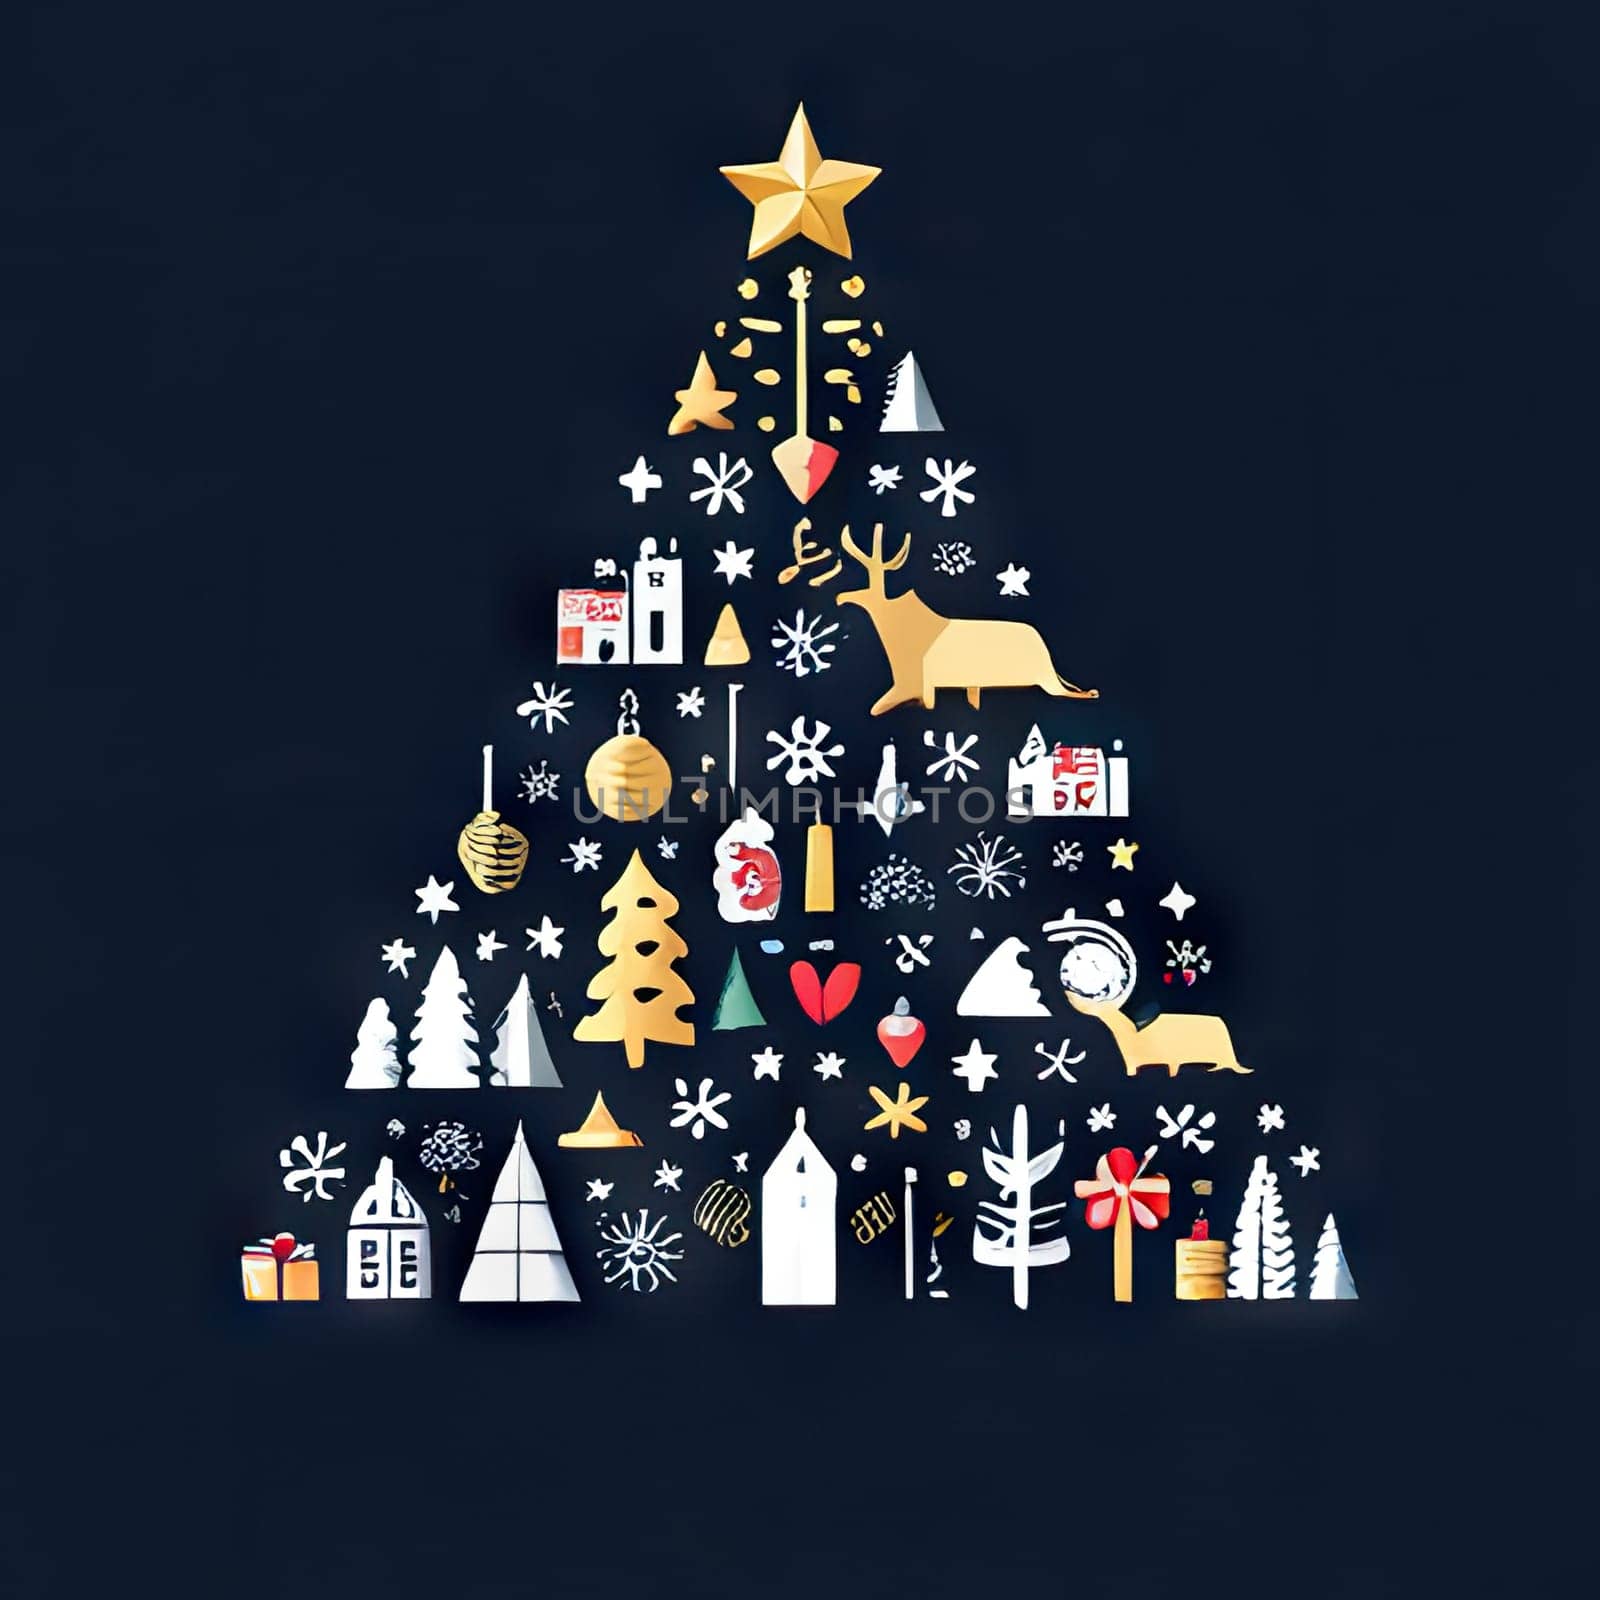 Greeting card with stylized Christmas Tree by EkaterinaPereslavtseva